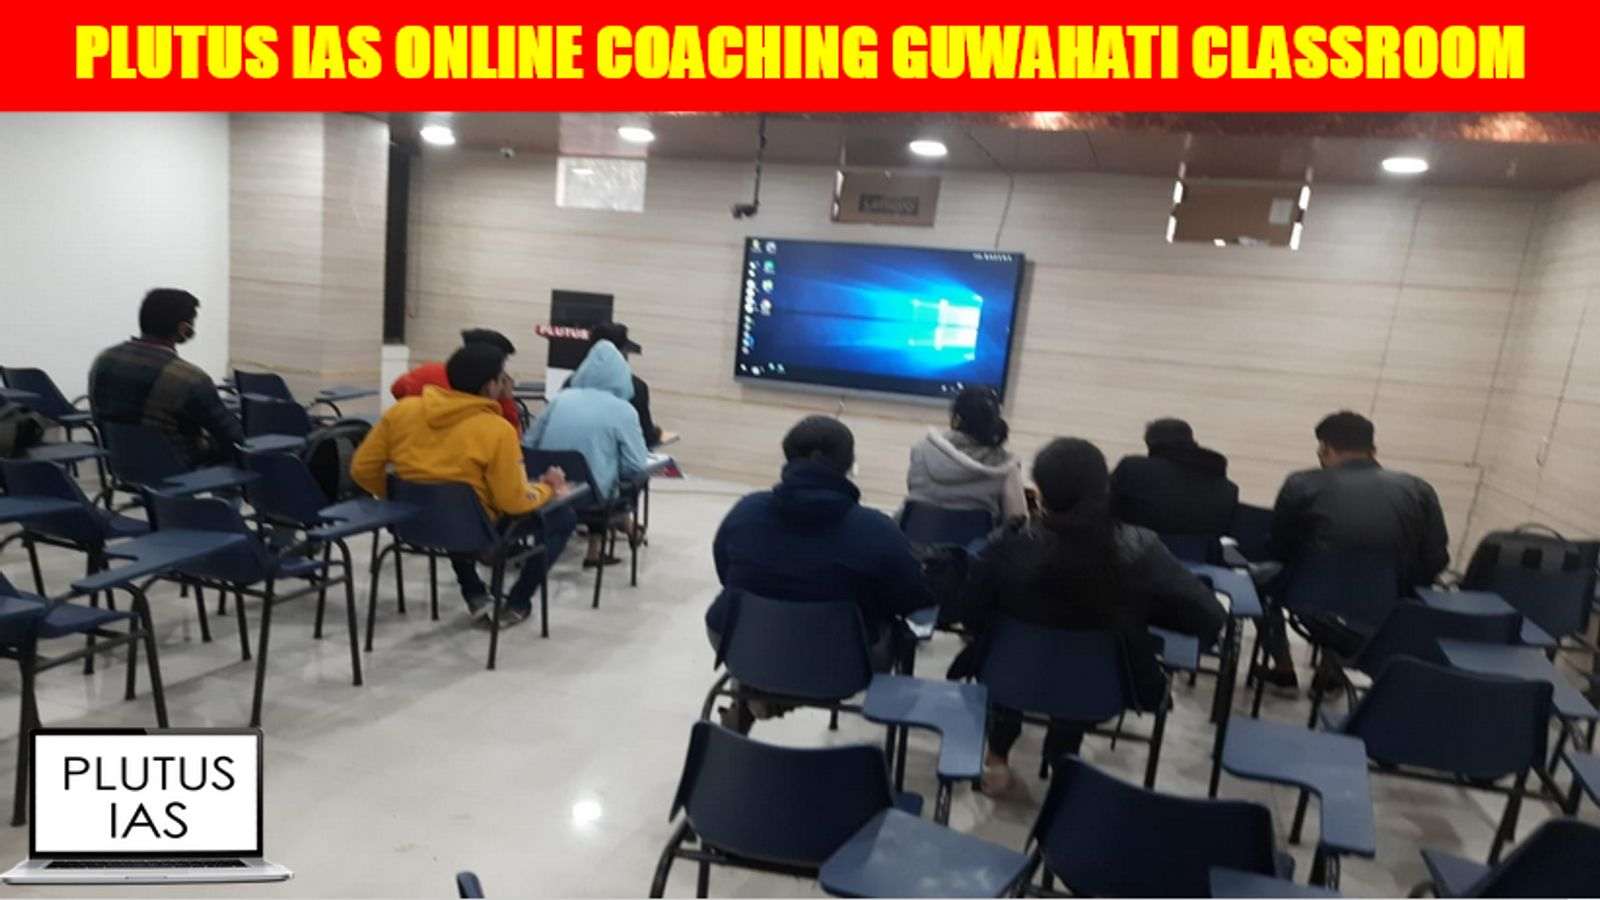 Plutus IAS Online Coaching Guwahati Class Room